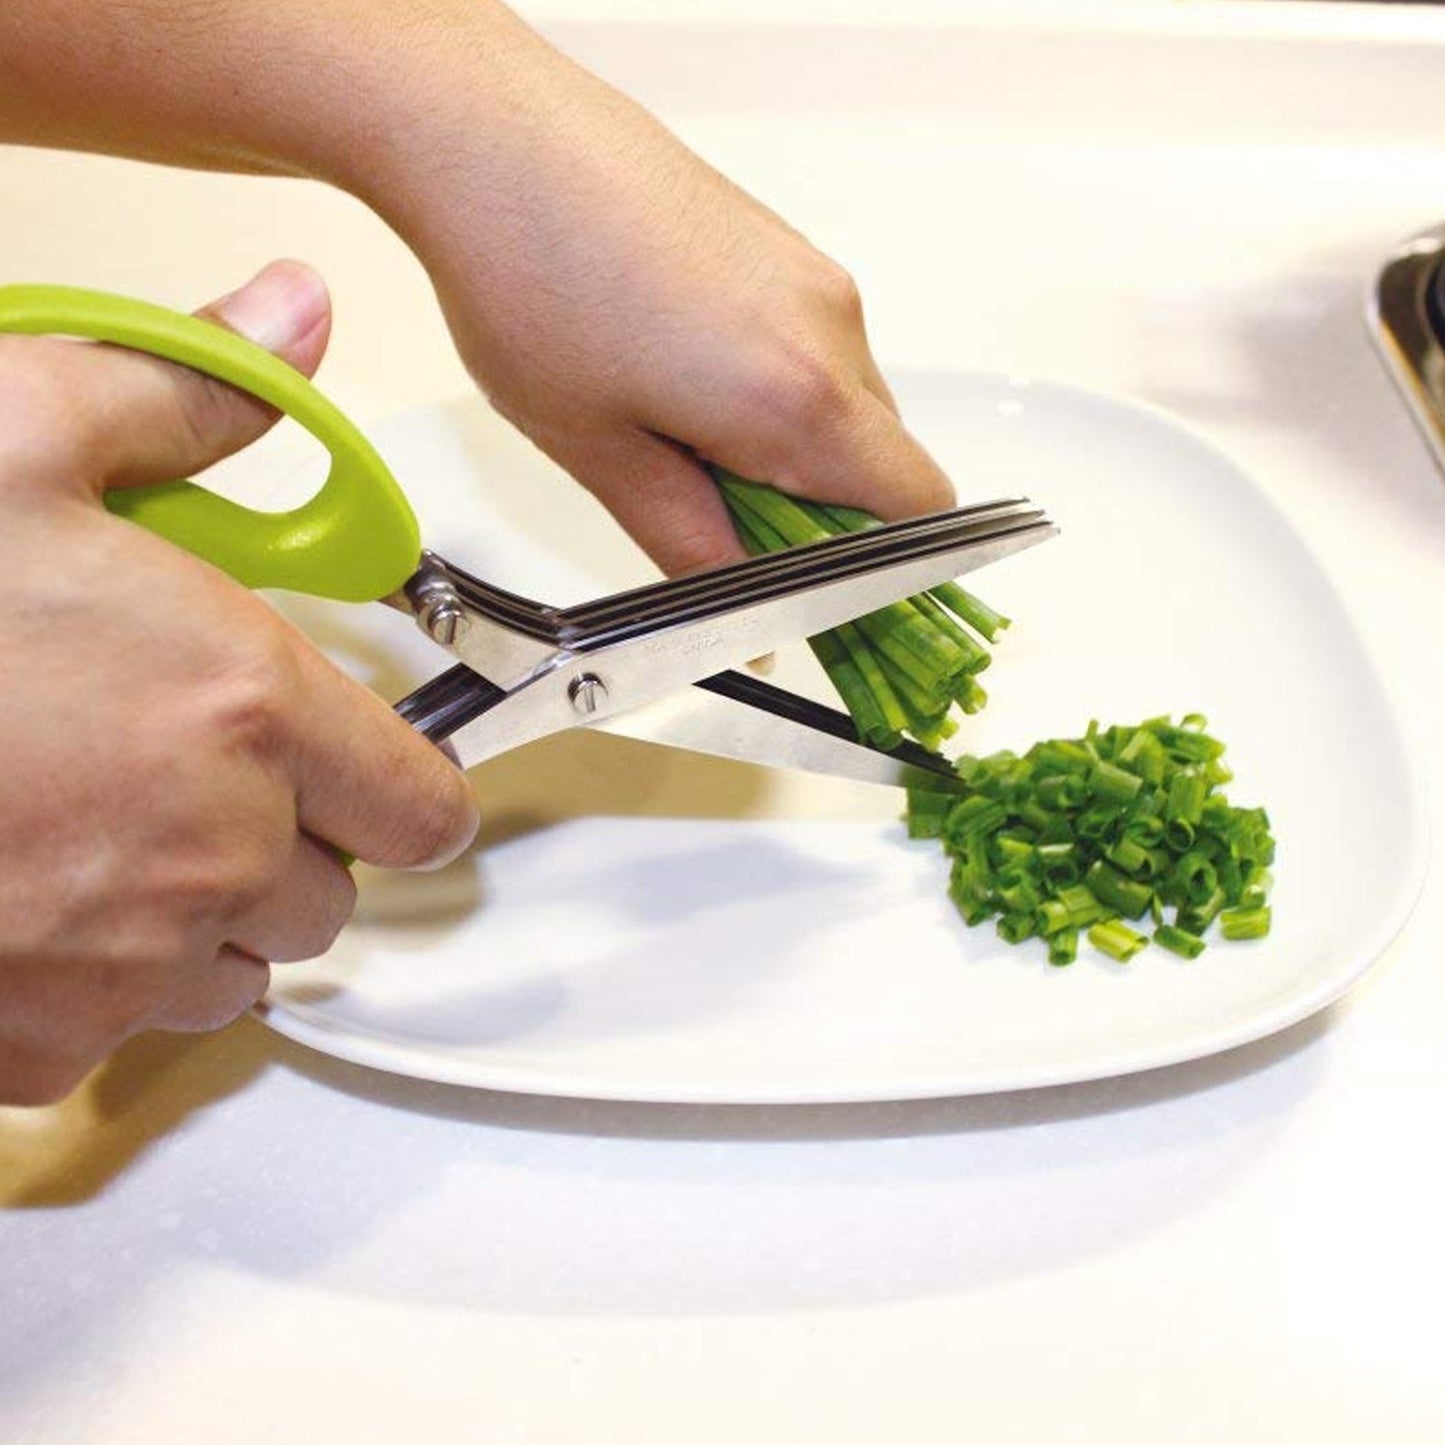 1564 Multifunction Vegetable Stainless Steel Herbs Scissor with 3 Blades